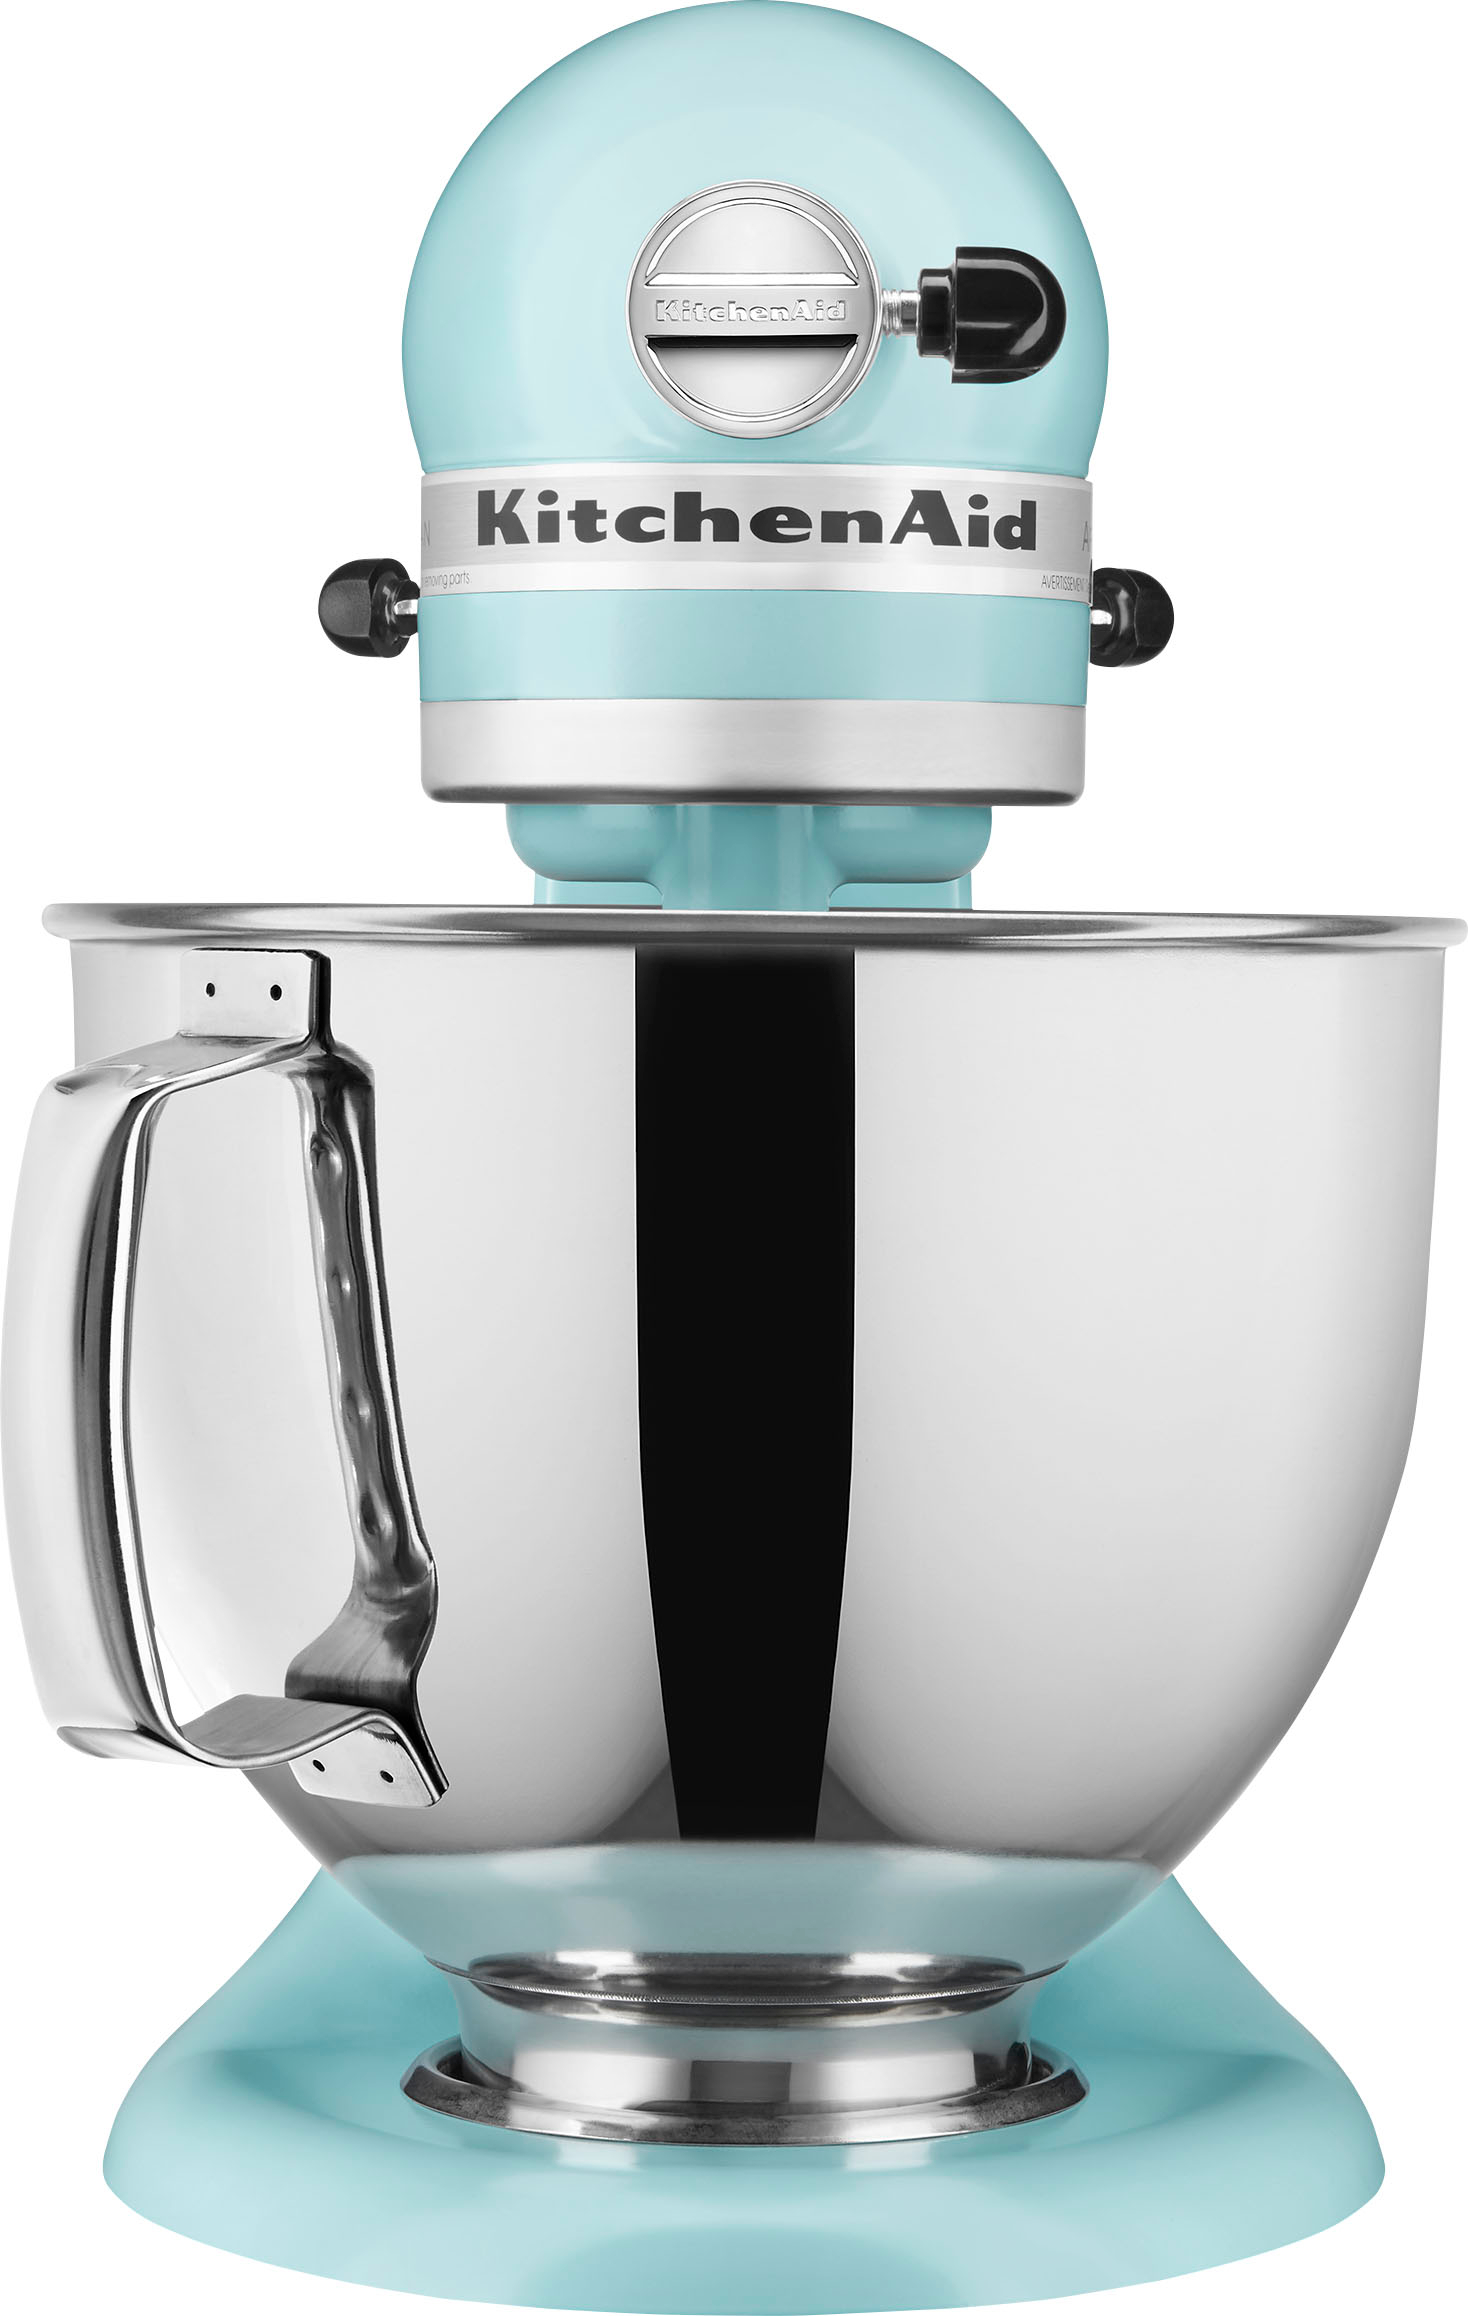 Left View: KitchenAid - Artisan Series 5 Quart Tilt-Head Stand Mixer - KSM150PSMI - Mineral Water Blue